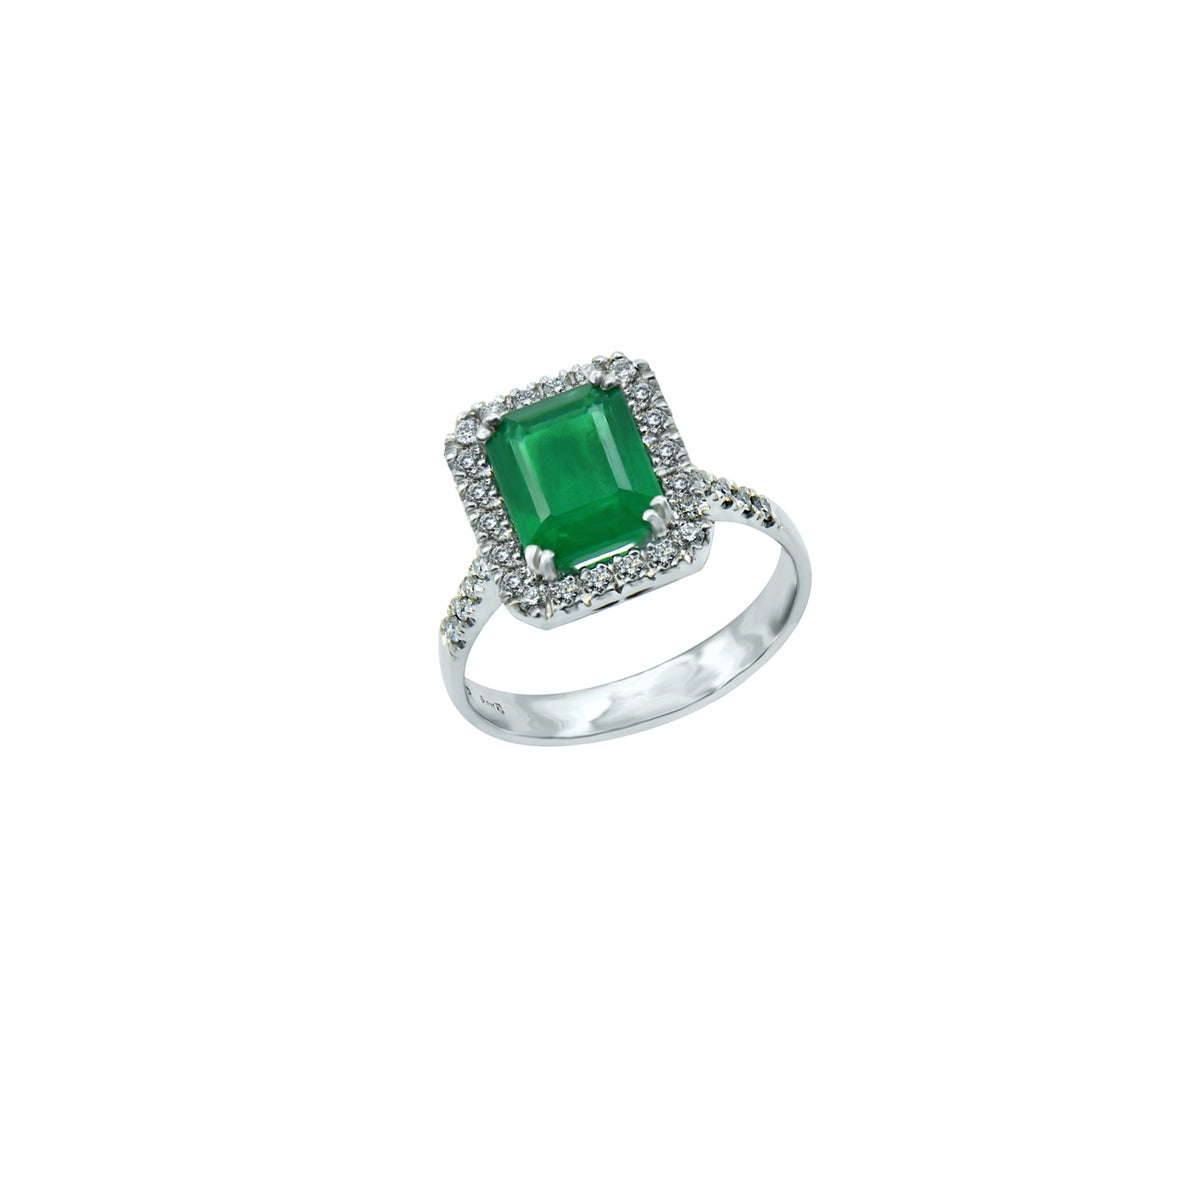 Emerald Ring. Green stone ring